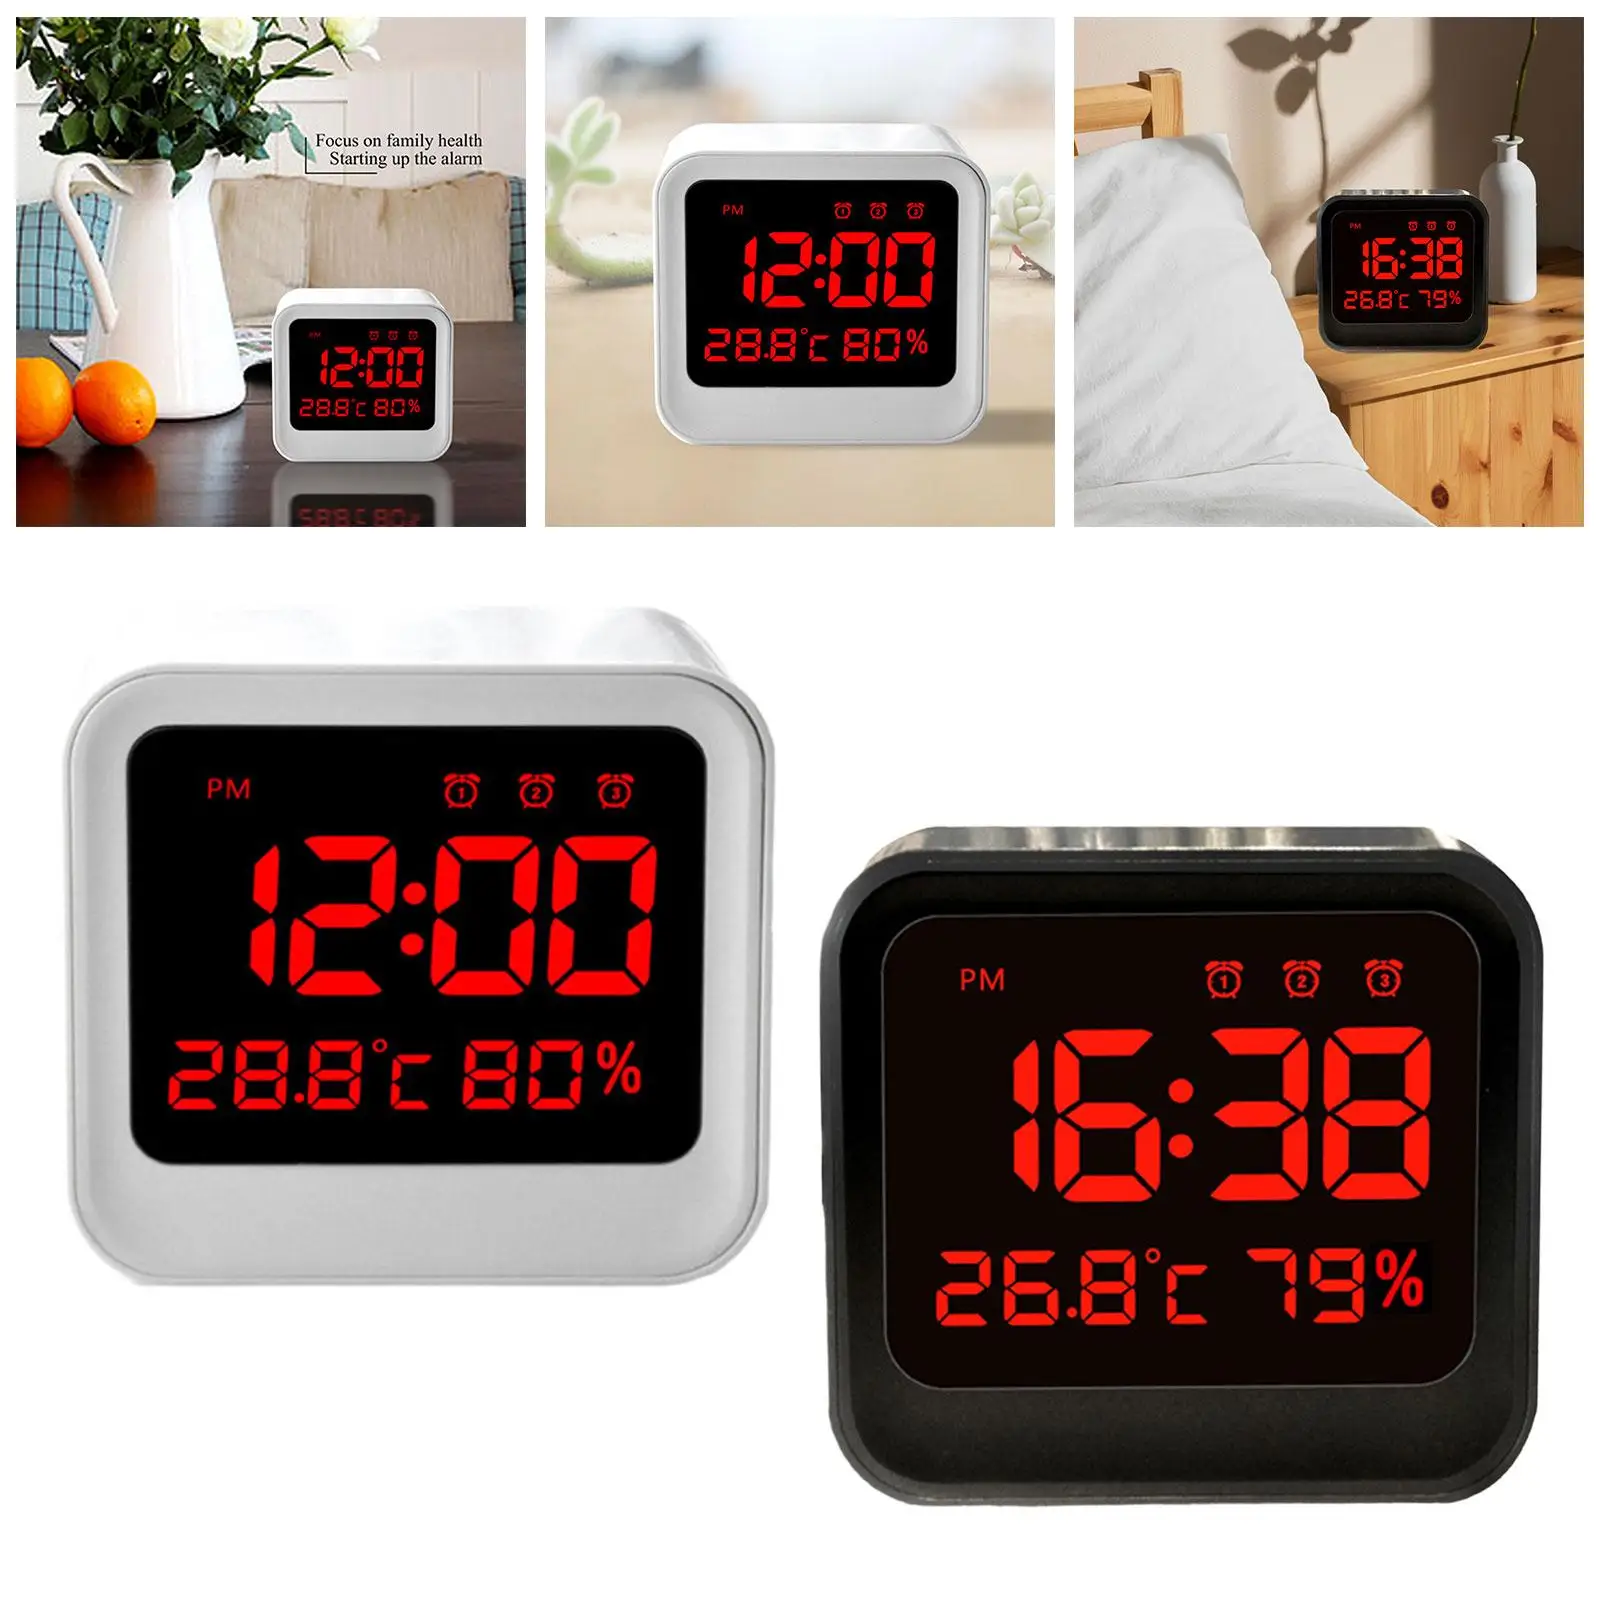 Digital Alarm Clock Temperature Display Large LED Display Bedside Clock for Bedroom Heavy Sleeper Kids Adult Office Bedside